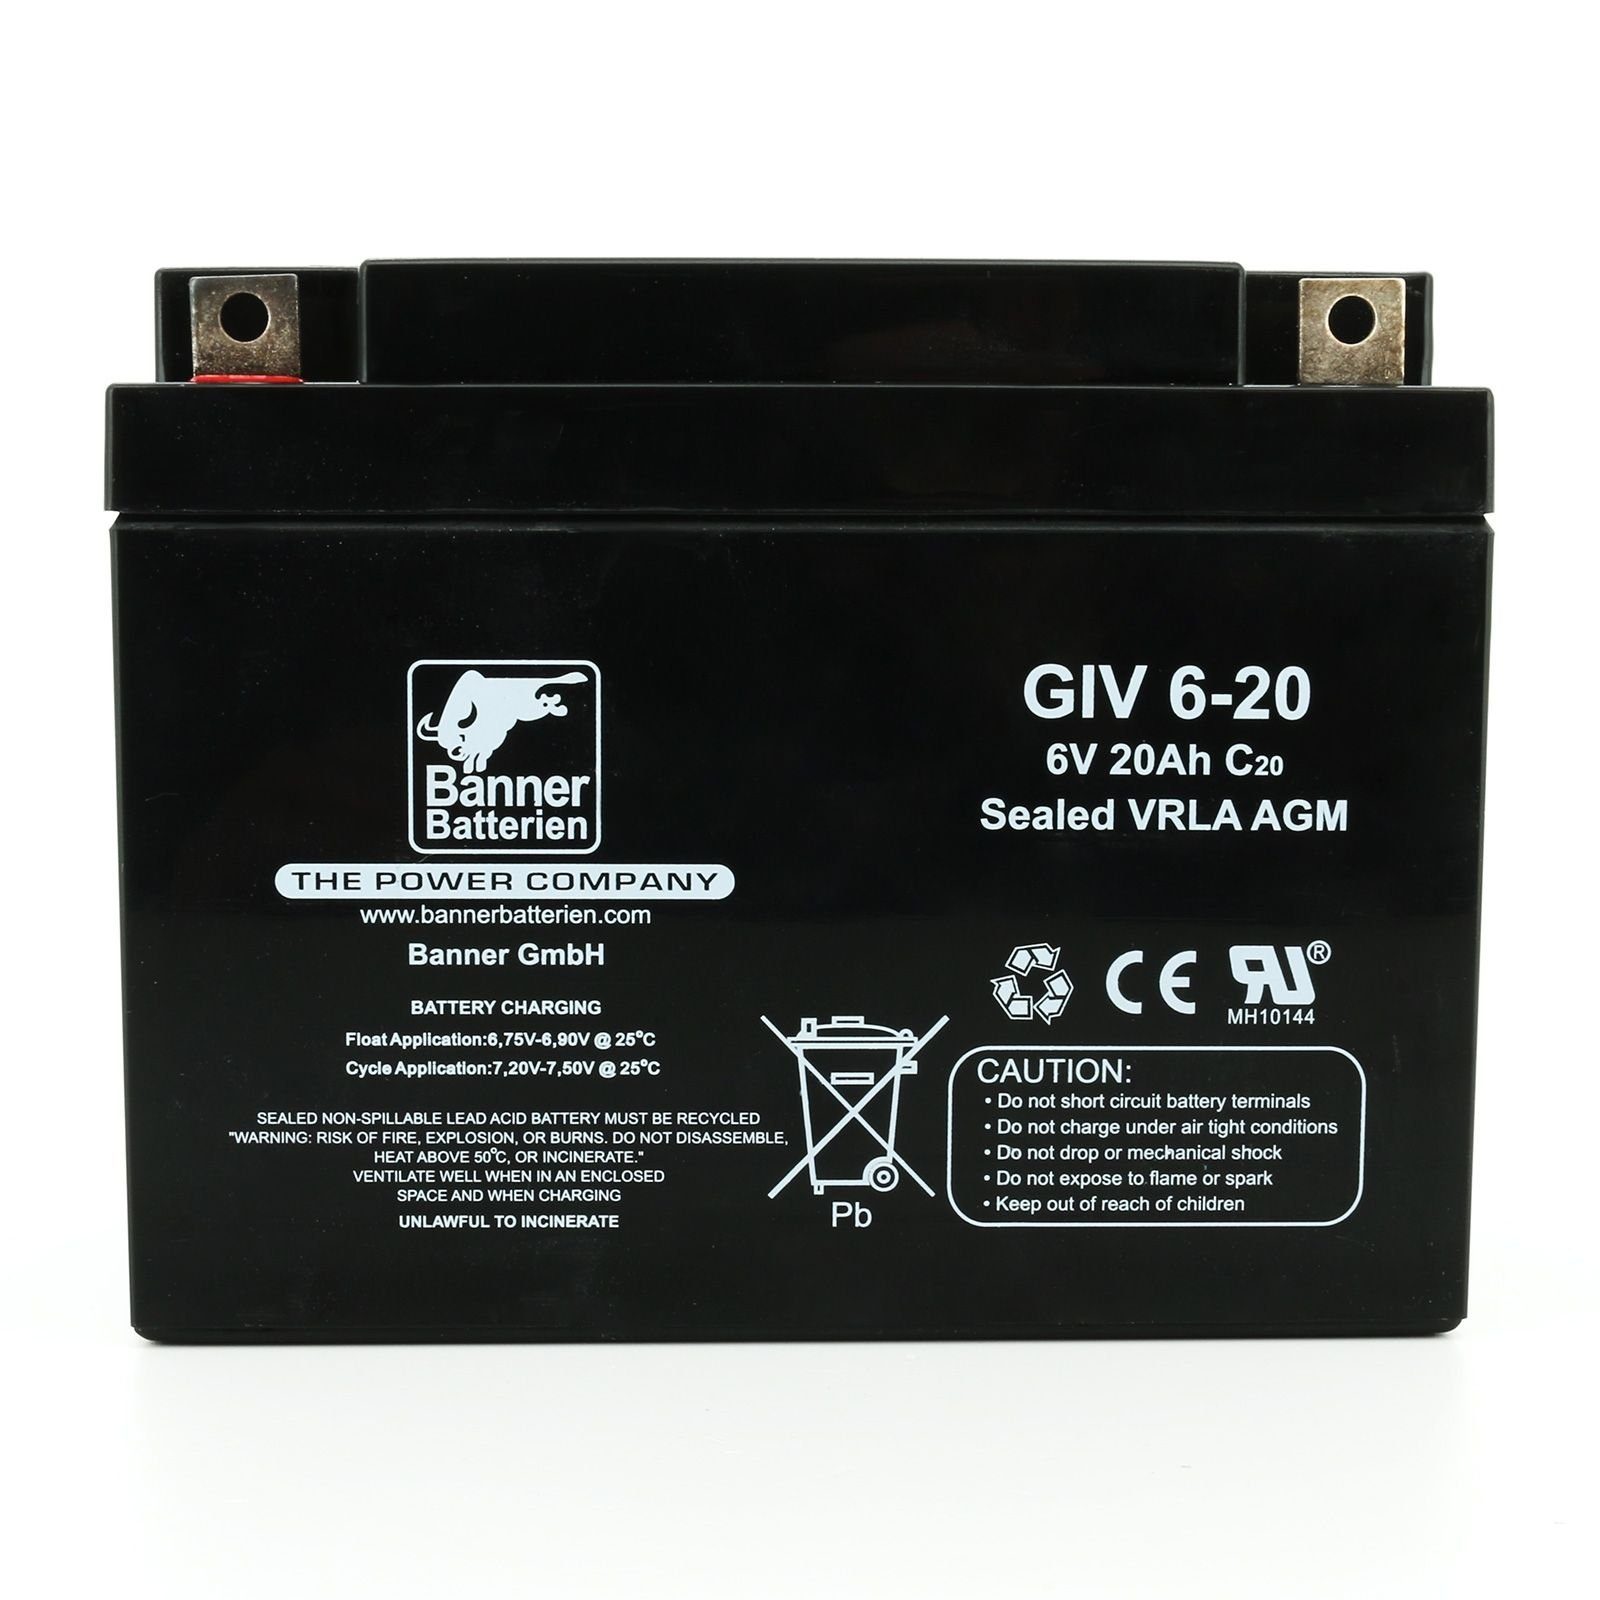 Batterie Volt 6 by GIV 06-20 Stand Volt Ah Banner 20 Ah 06-20 6 GIV Batterien Batterie, 20 Bull